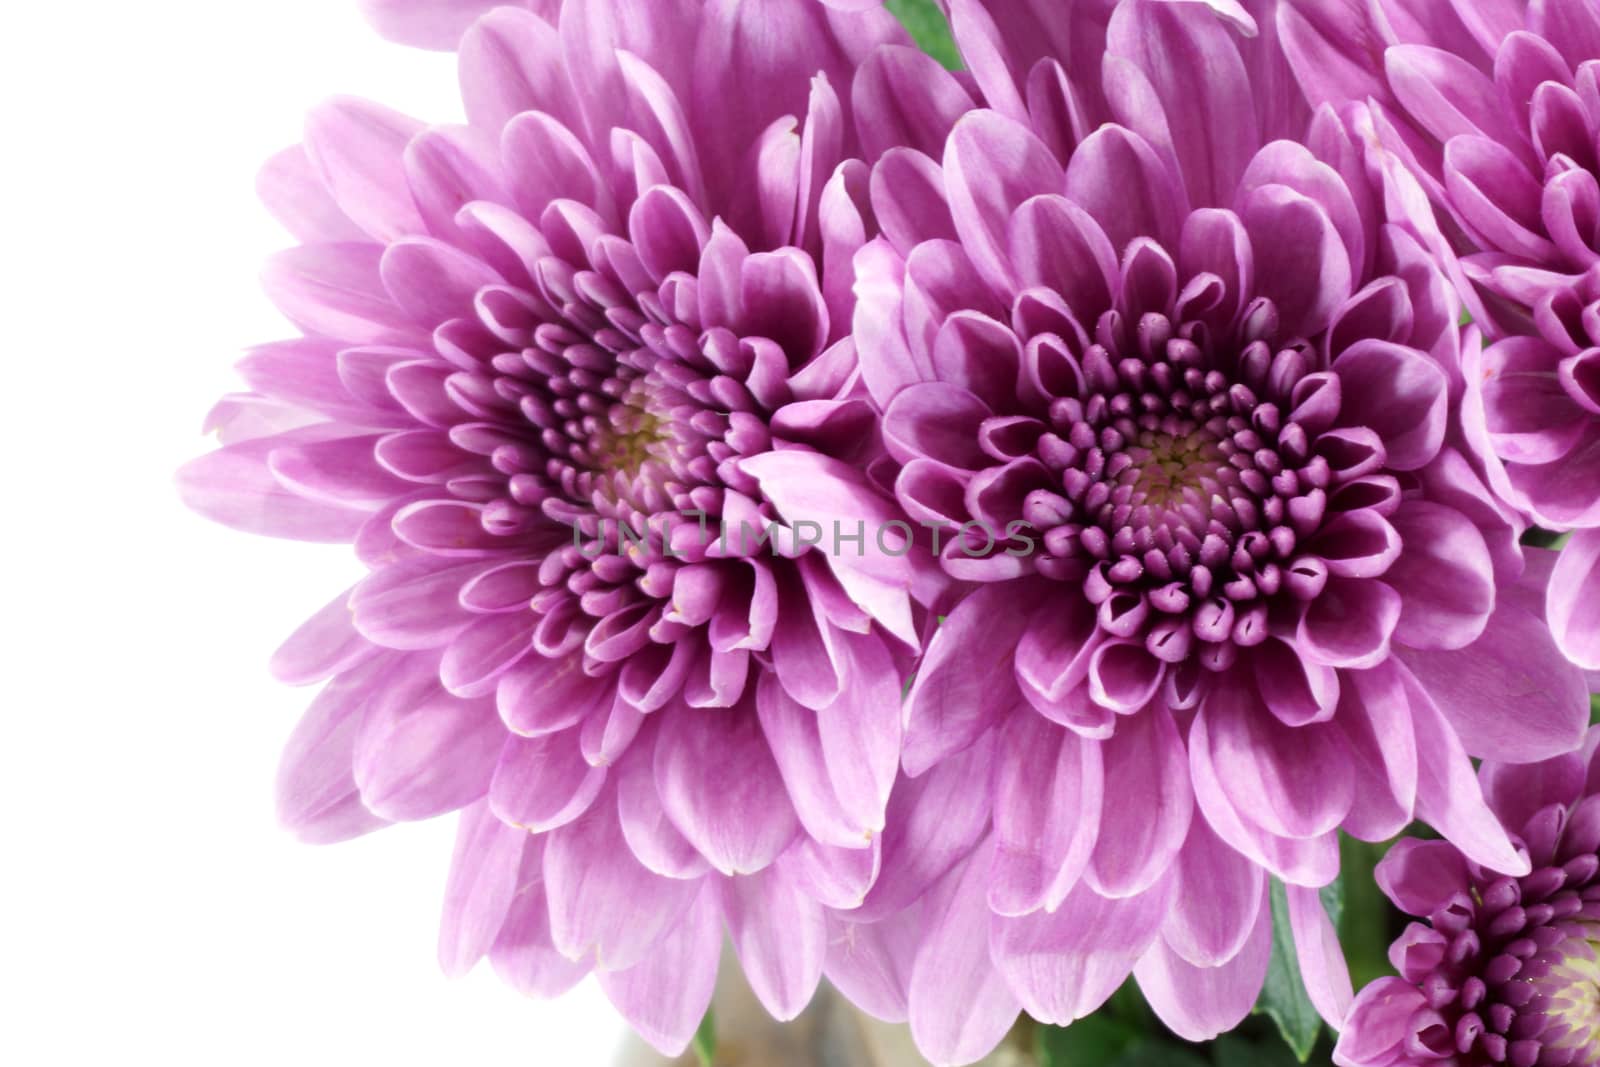 Violet chrysanthemum on white background by Noppharat_th